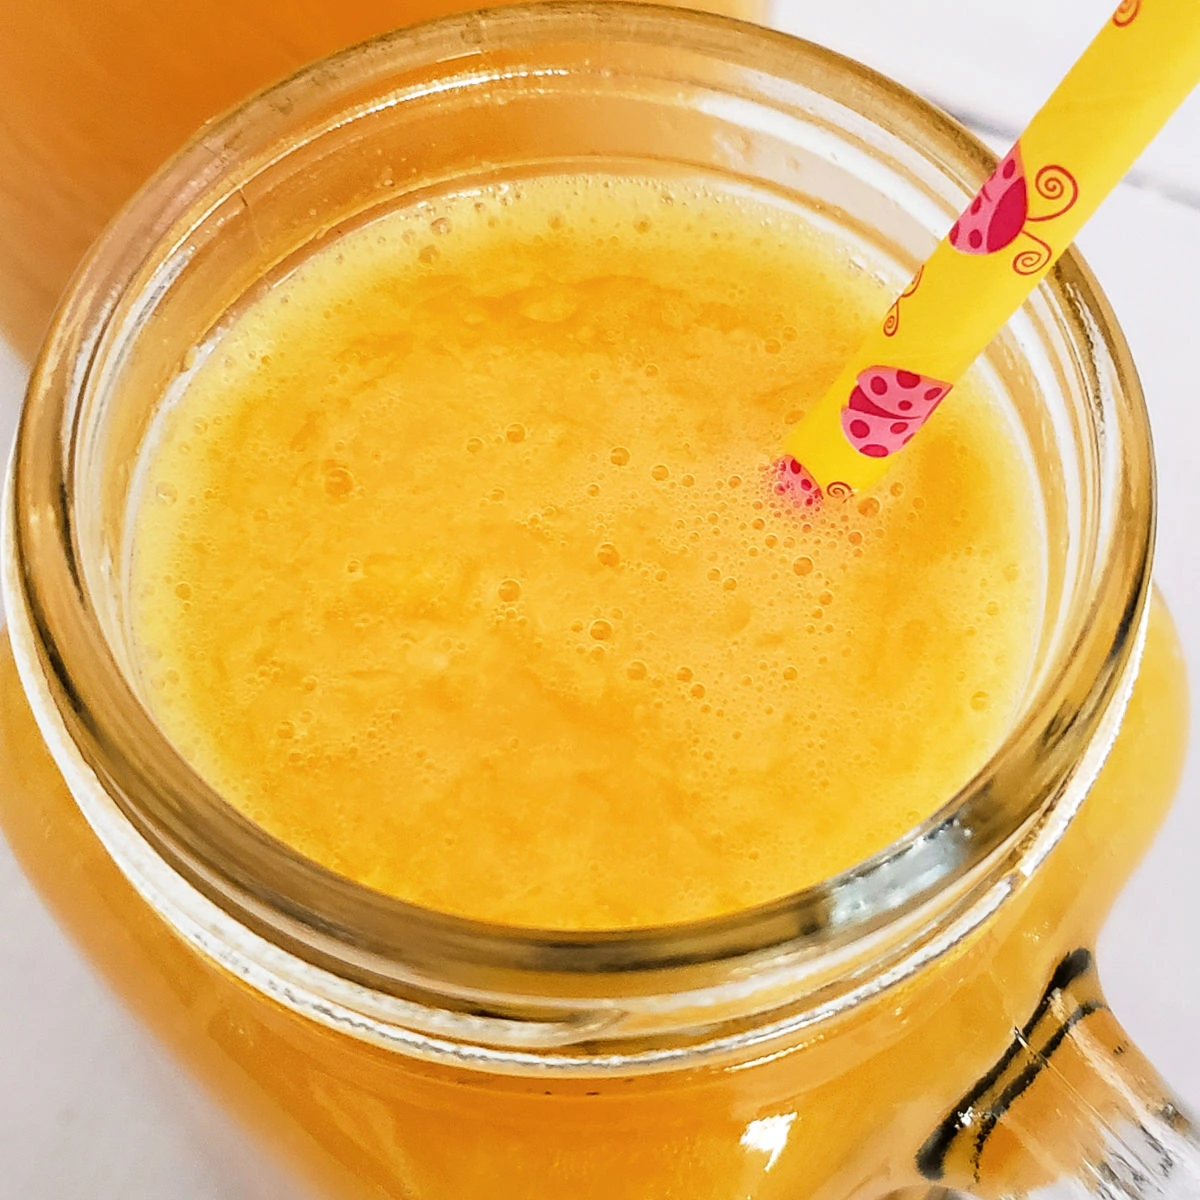 Glass of homemade fermented orange juice.